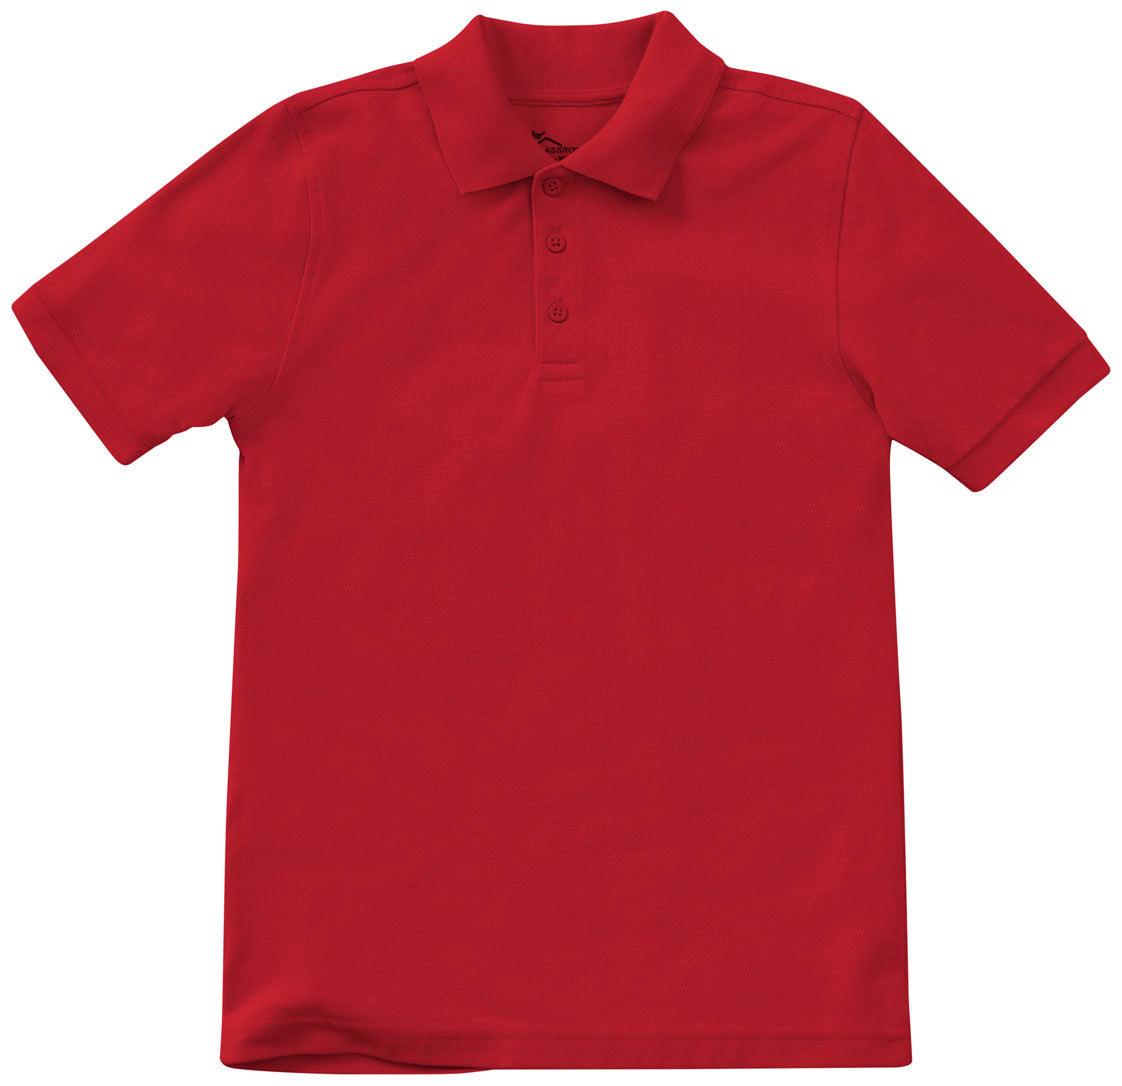 Secaucus District PreK to 5th grade Polo - Jay's Uniform